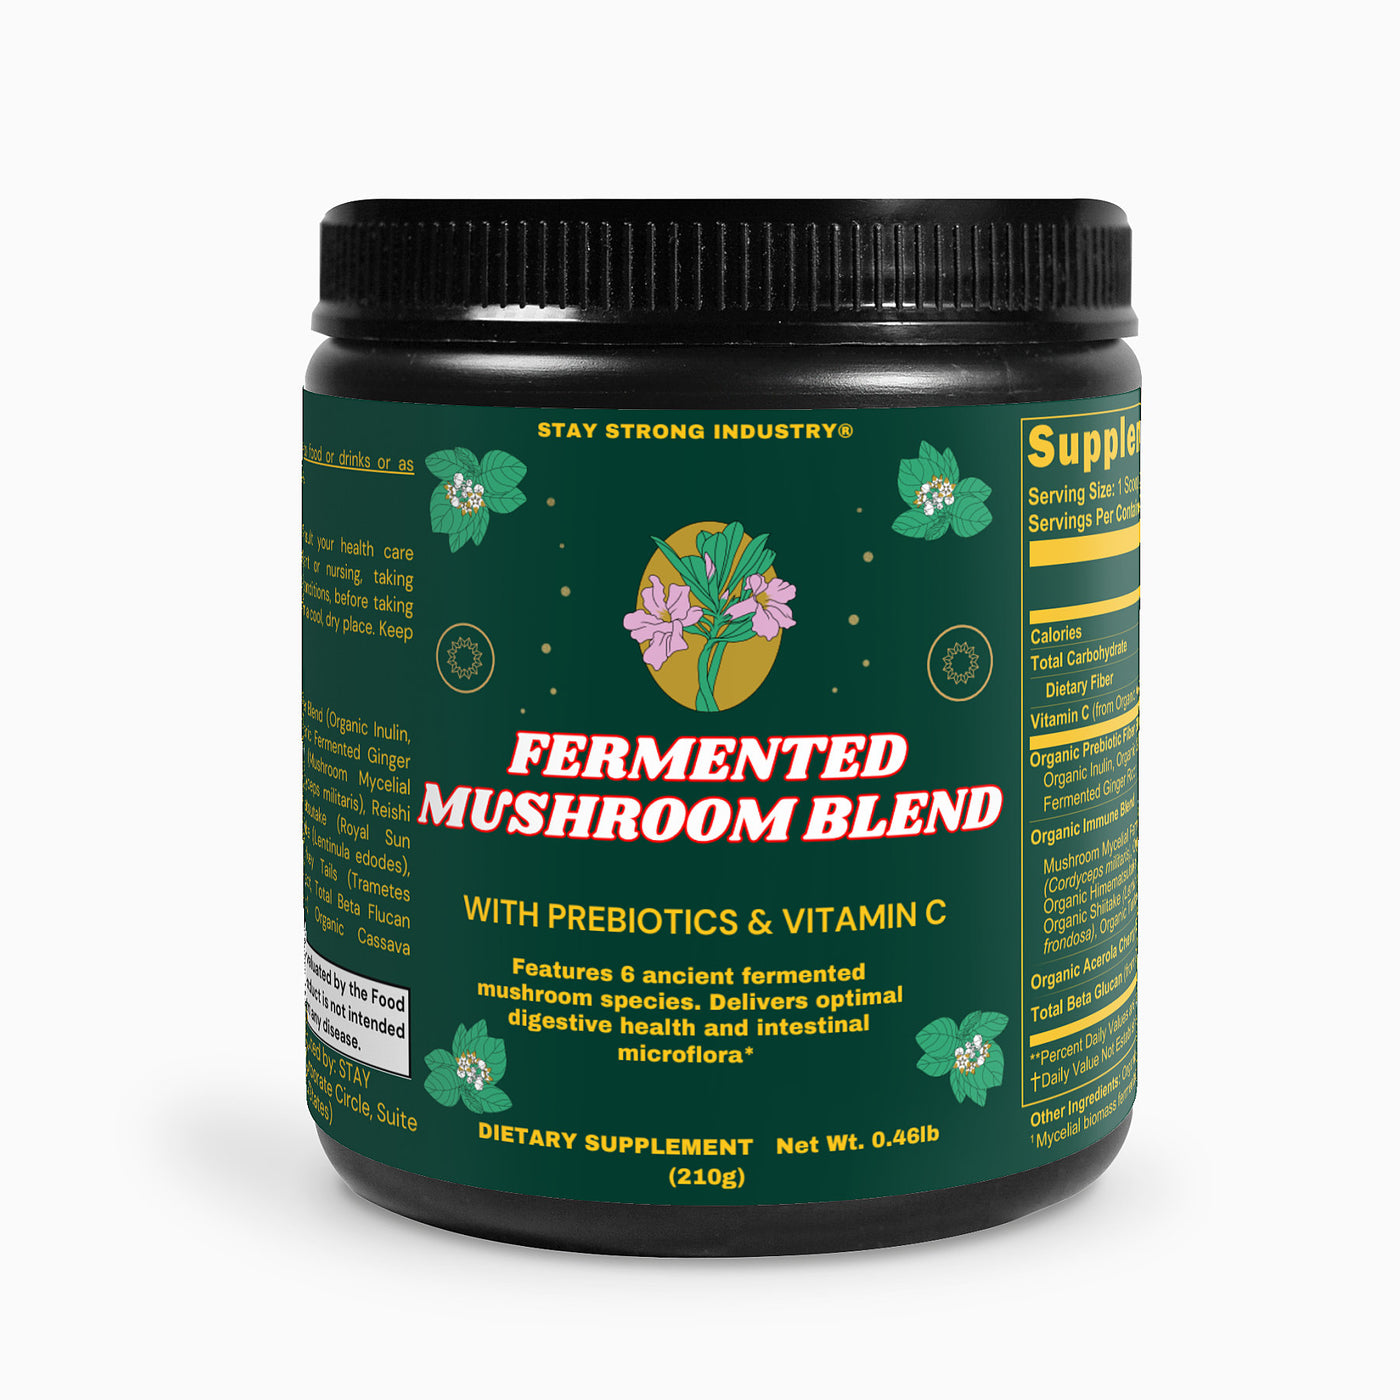 Fermented Mushroom Blend "STAY STRONG® "